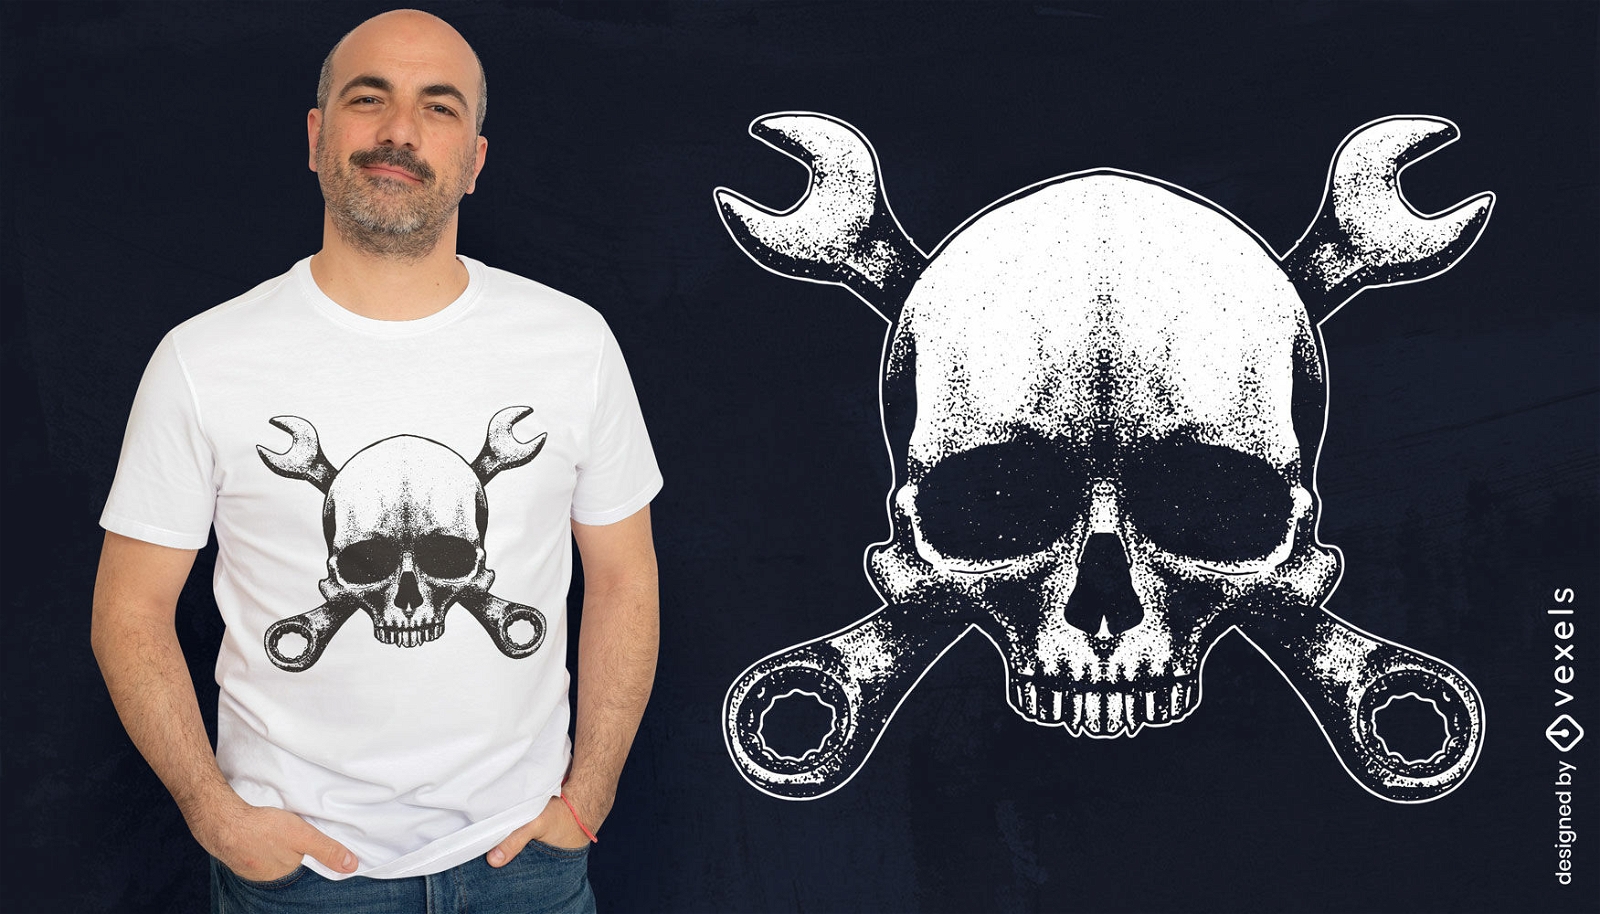 Skull and mechanic tools t-shirt design